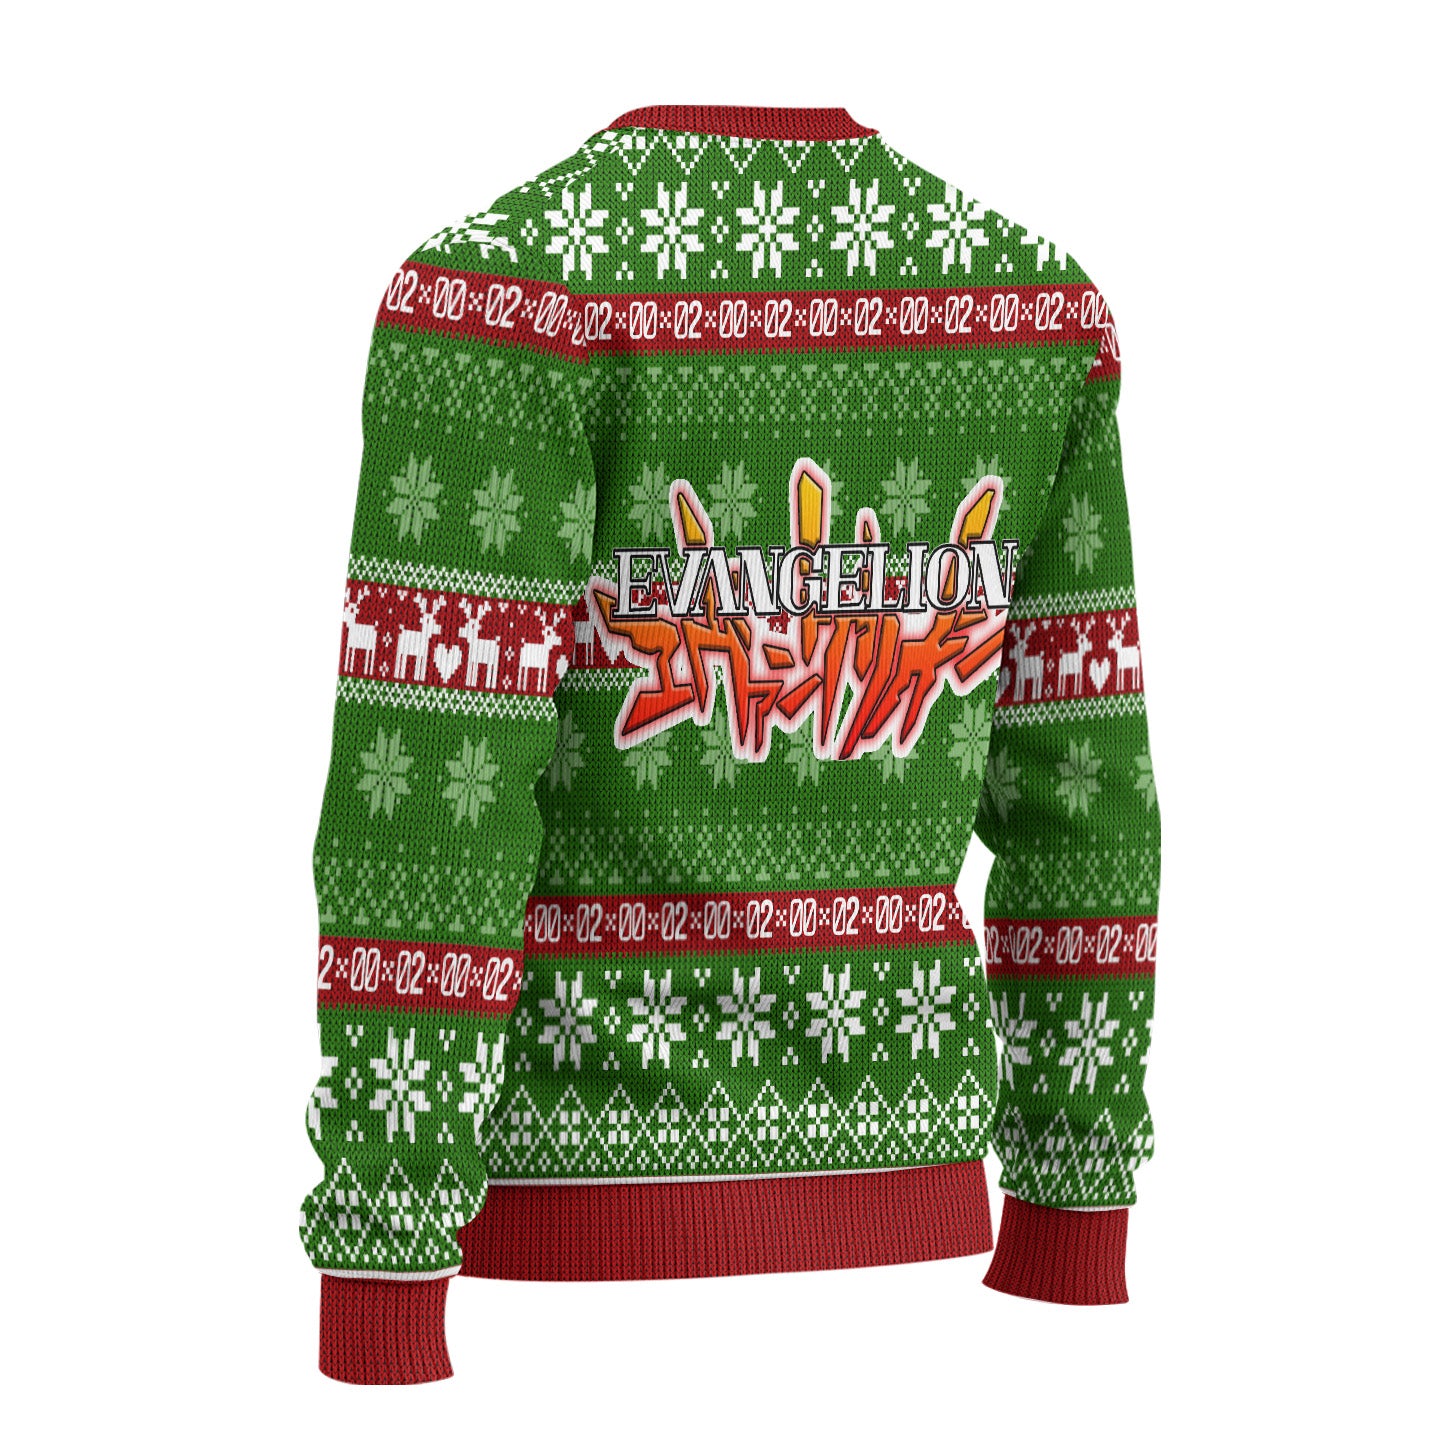 Kaworu x Shinji Anime Ugly Christmas Sweater Custom Neon Genesis Evangelion New Design